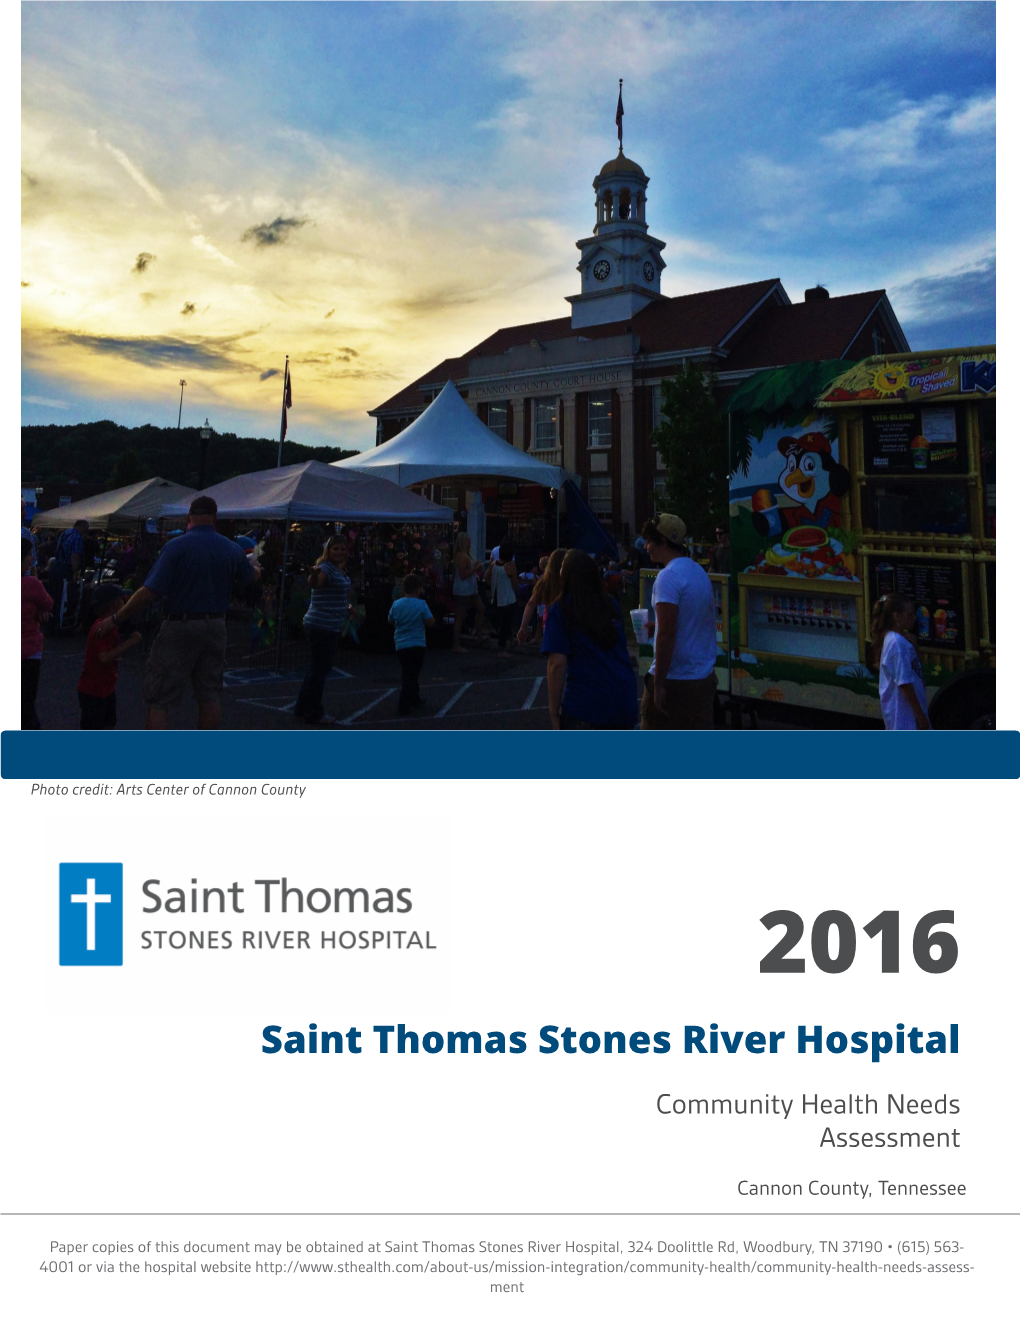 Saint Thomas Stones River Hospital Community Health Needs Assessment